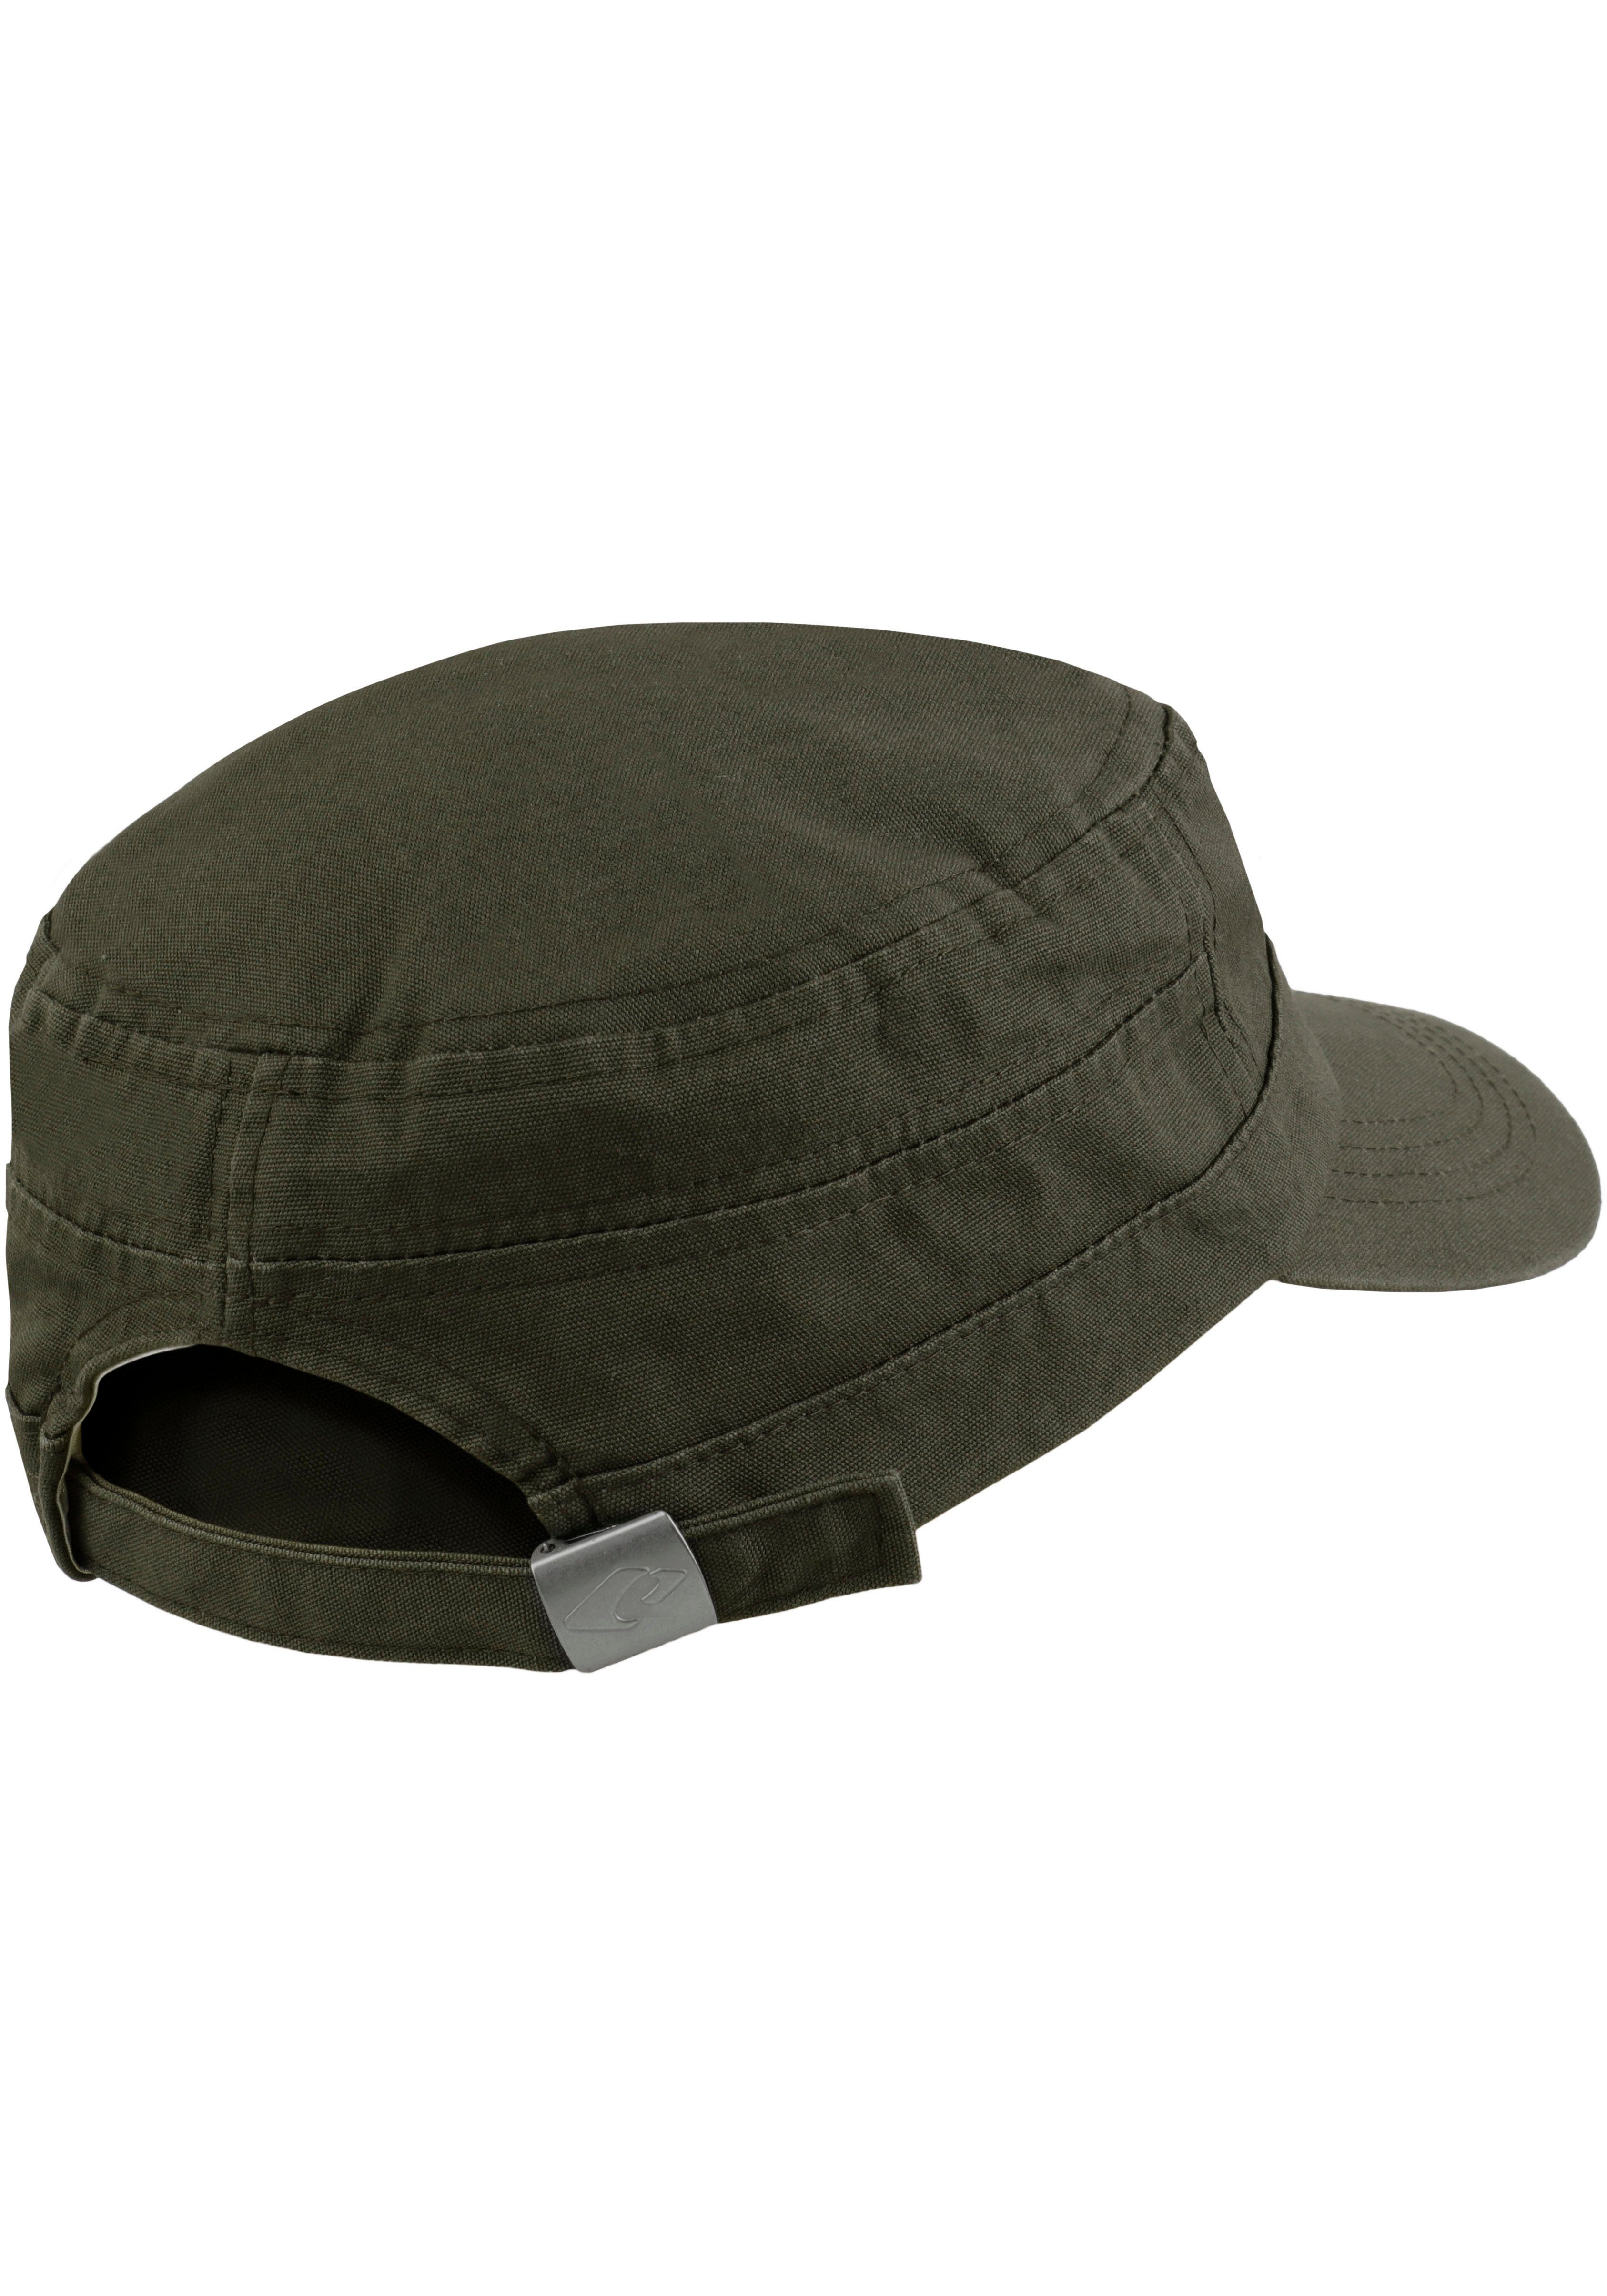 olivgrün Size reiner Cap Hat aus Paso chillouts atmungsaktiv, El Army Baumwolle, One